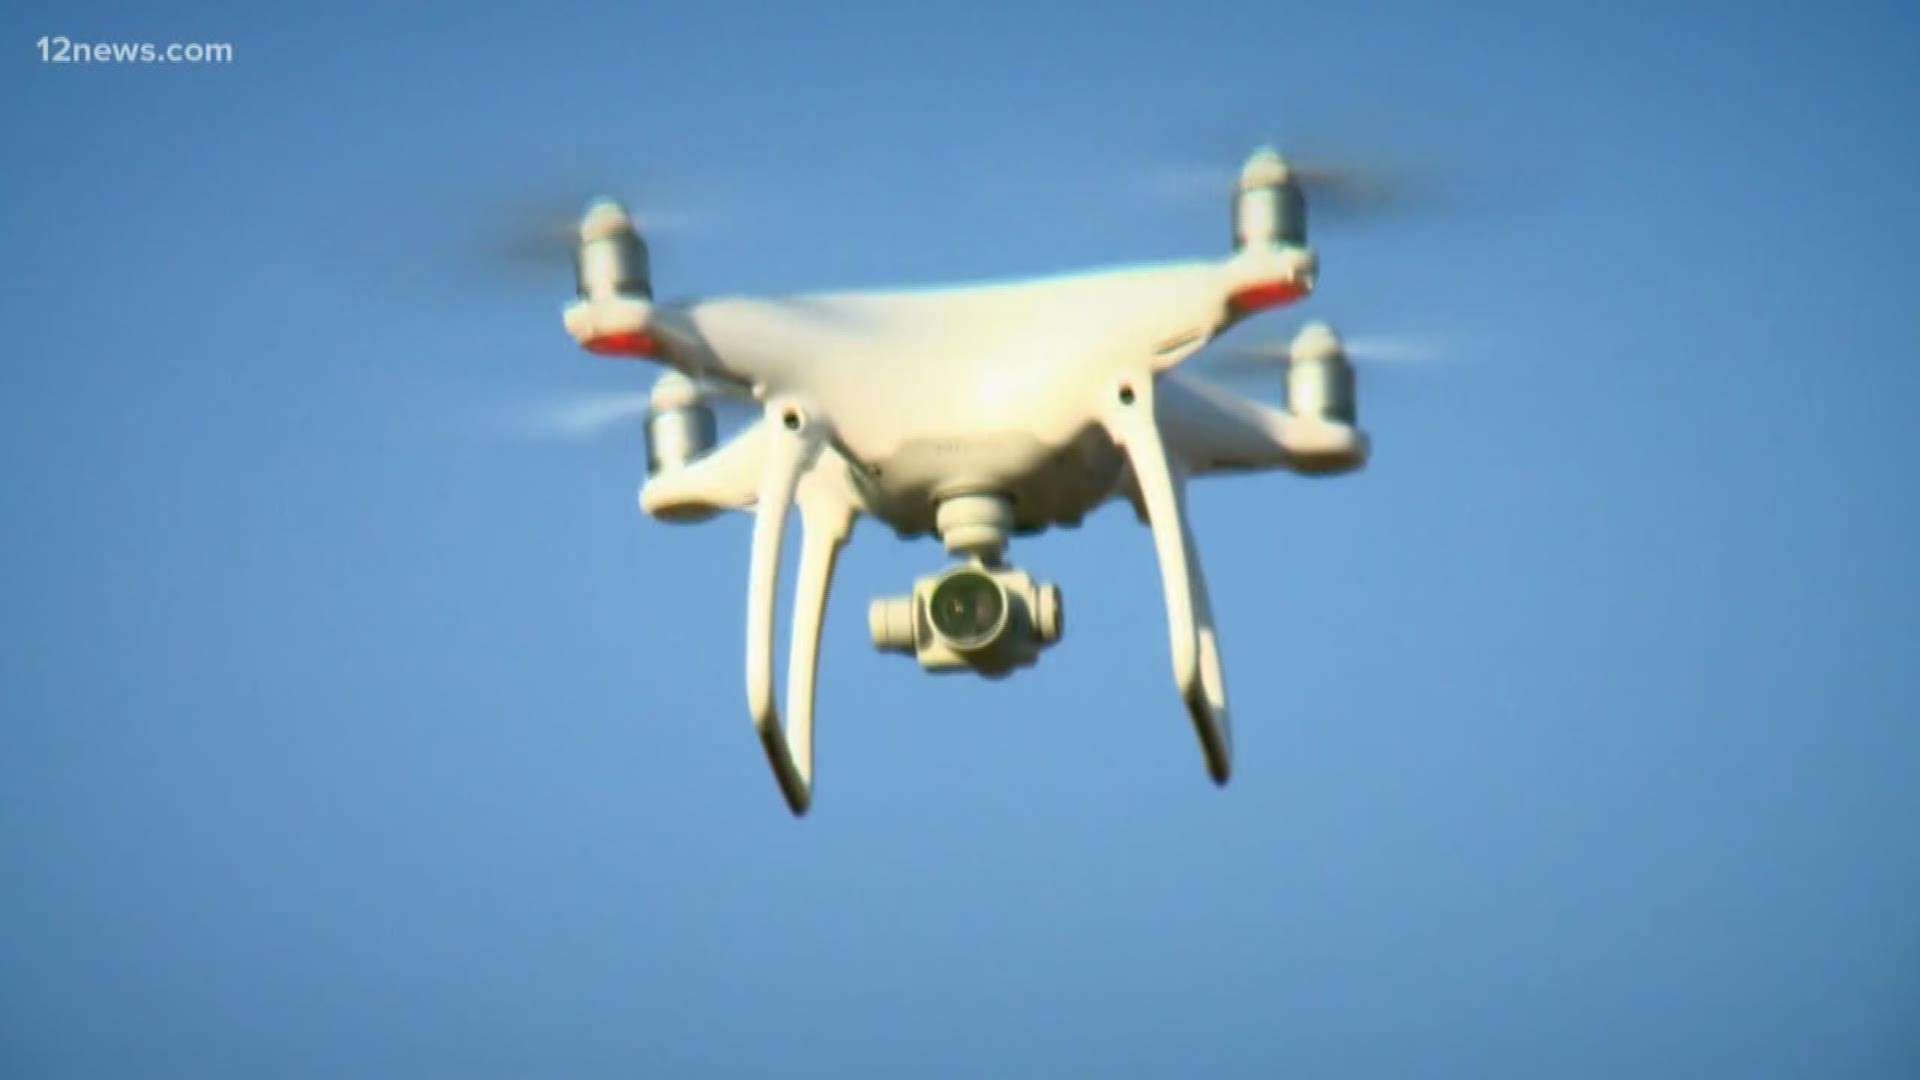 benjamin kogel recommends drone peeping tom videos pic